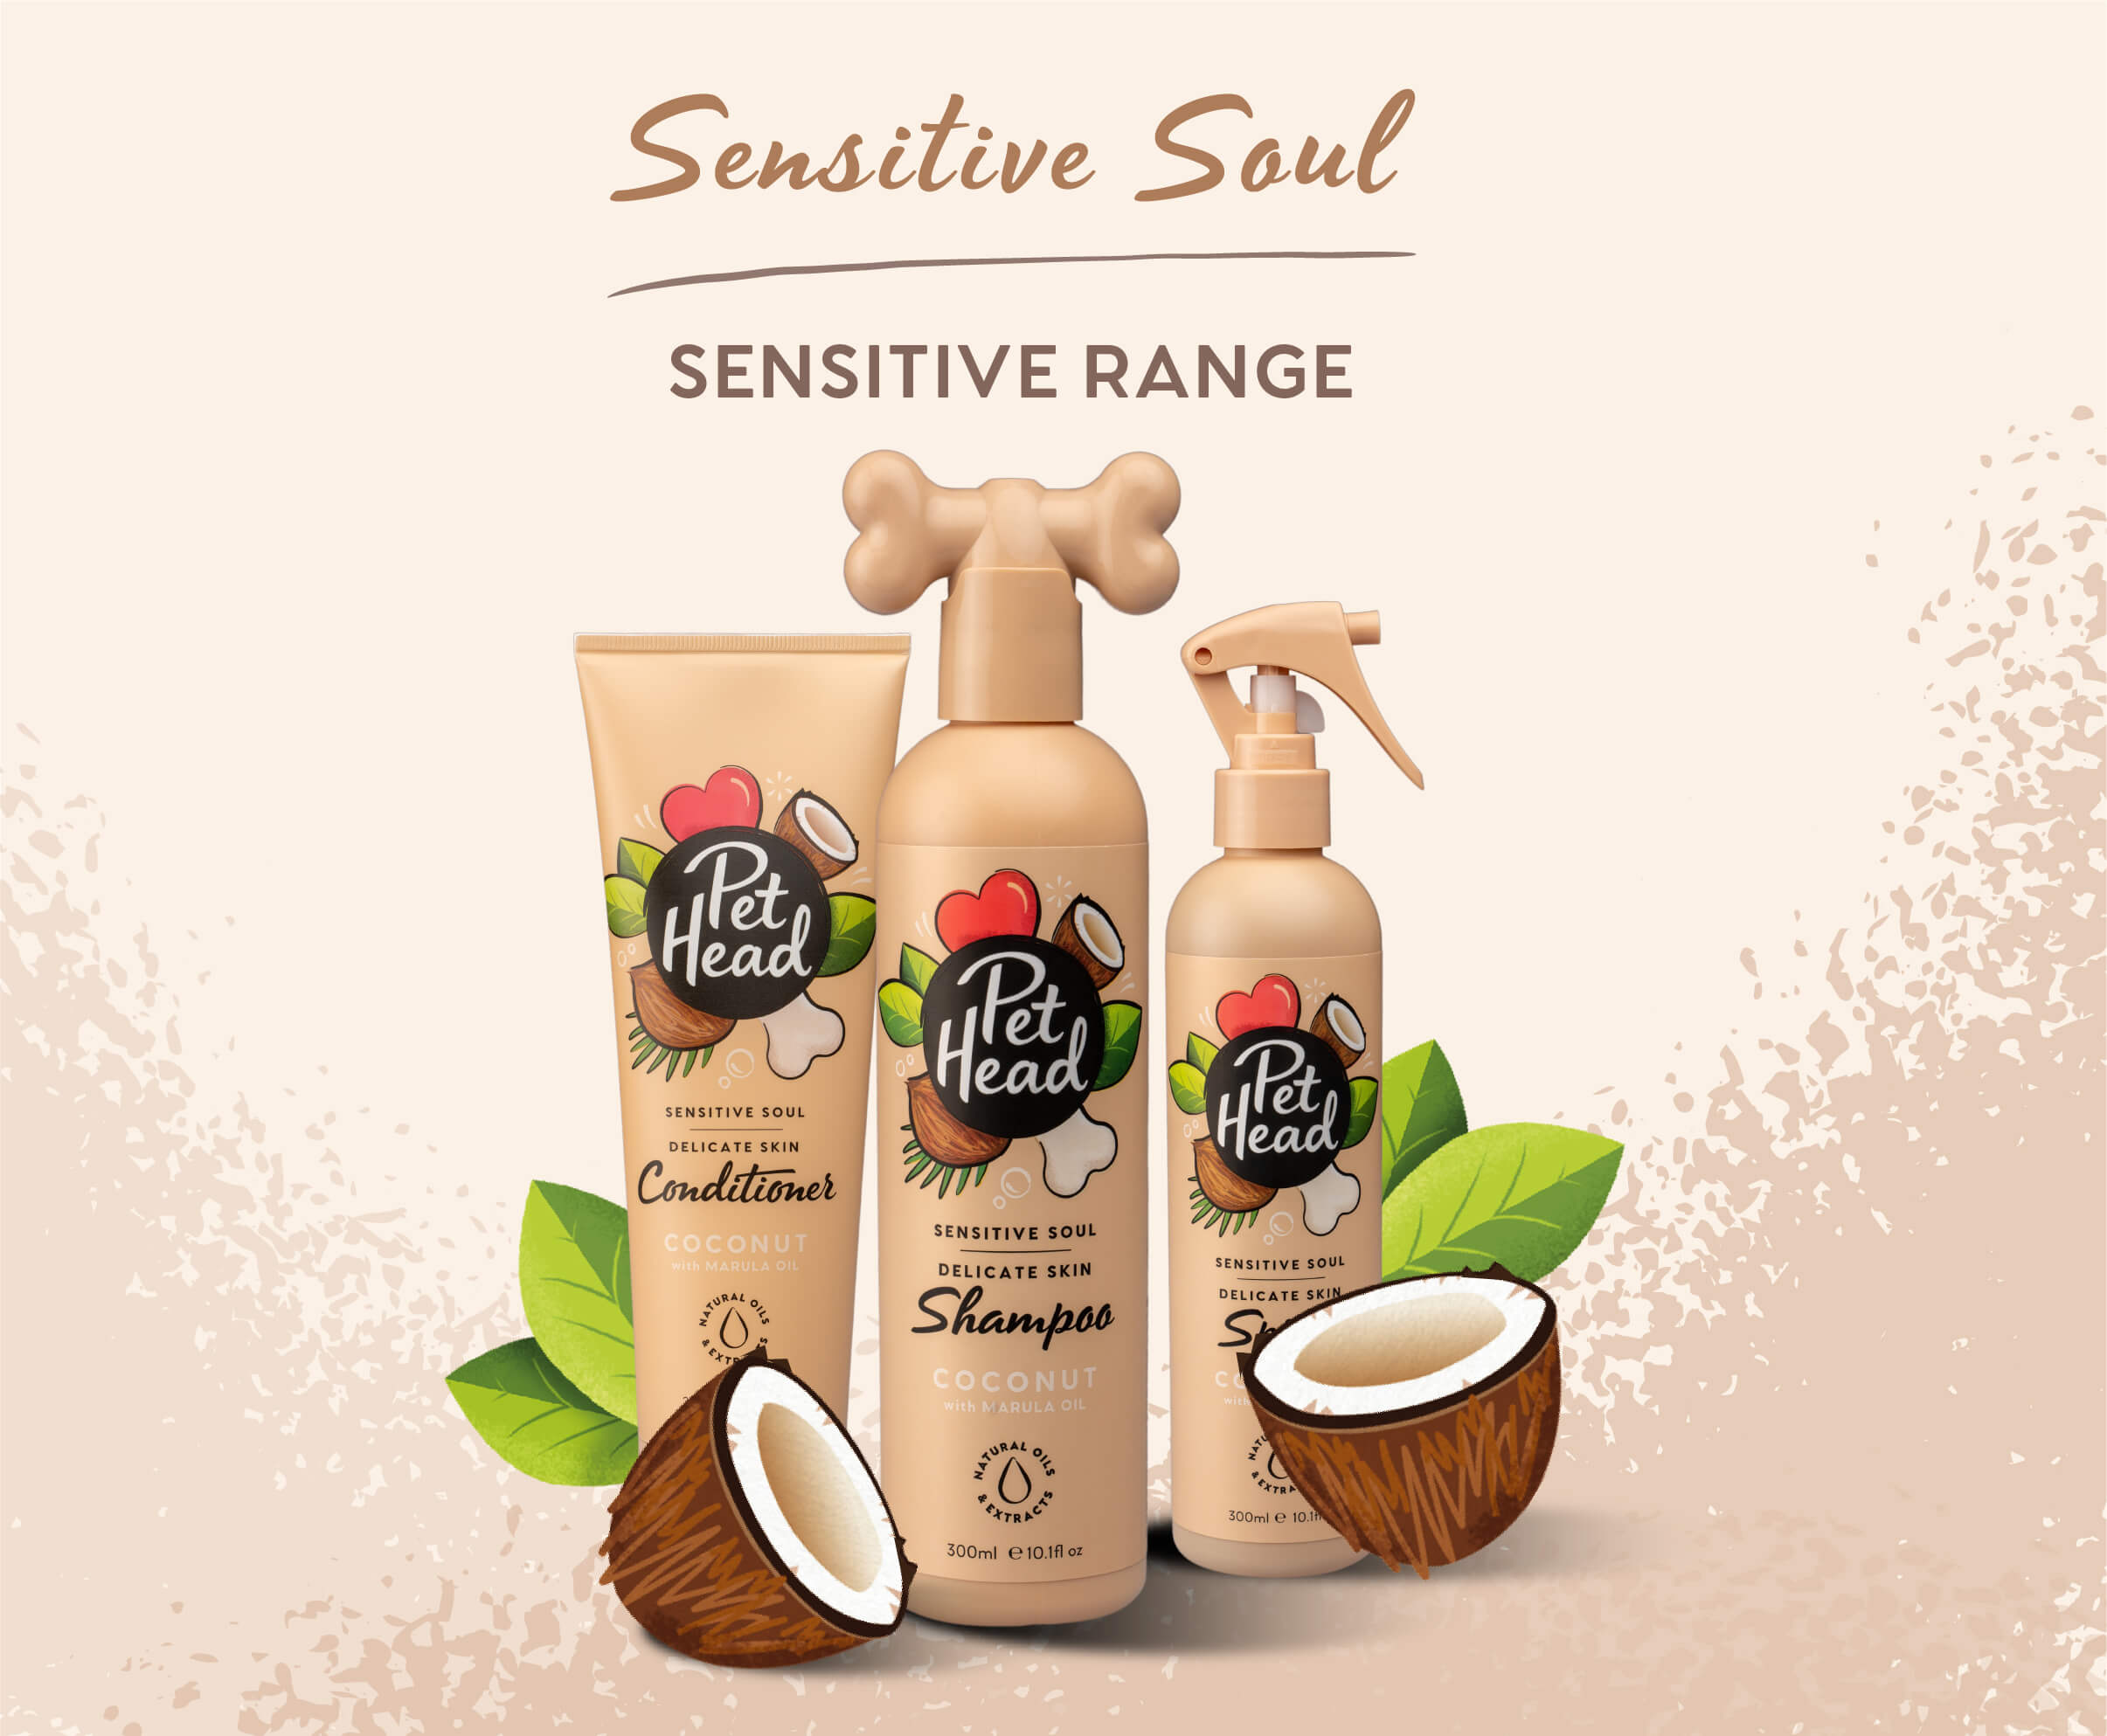 Product shots of the Pet Head Sensitive Soul range